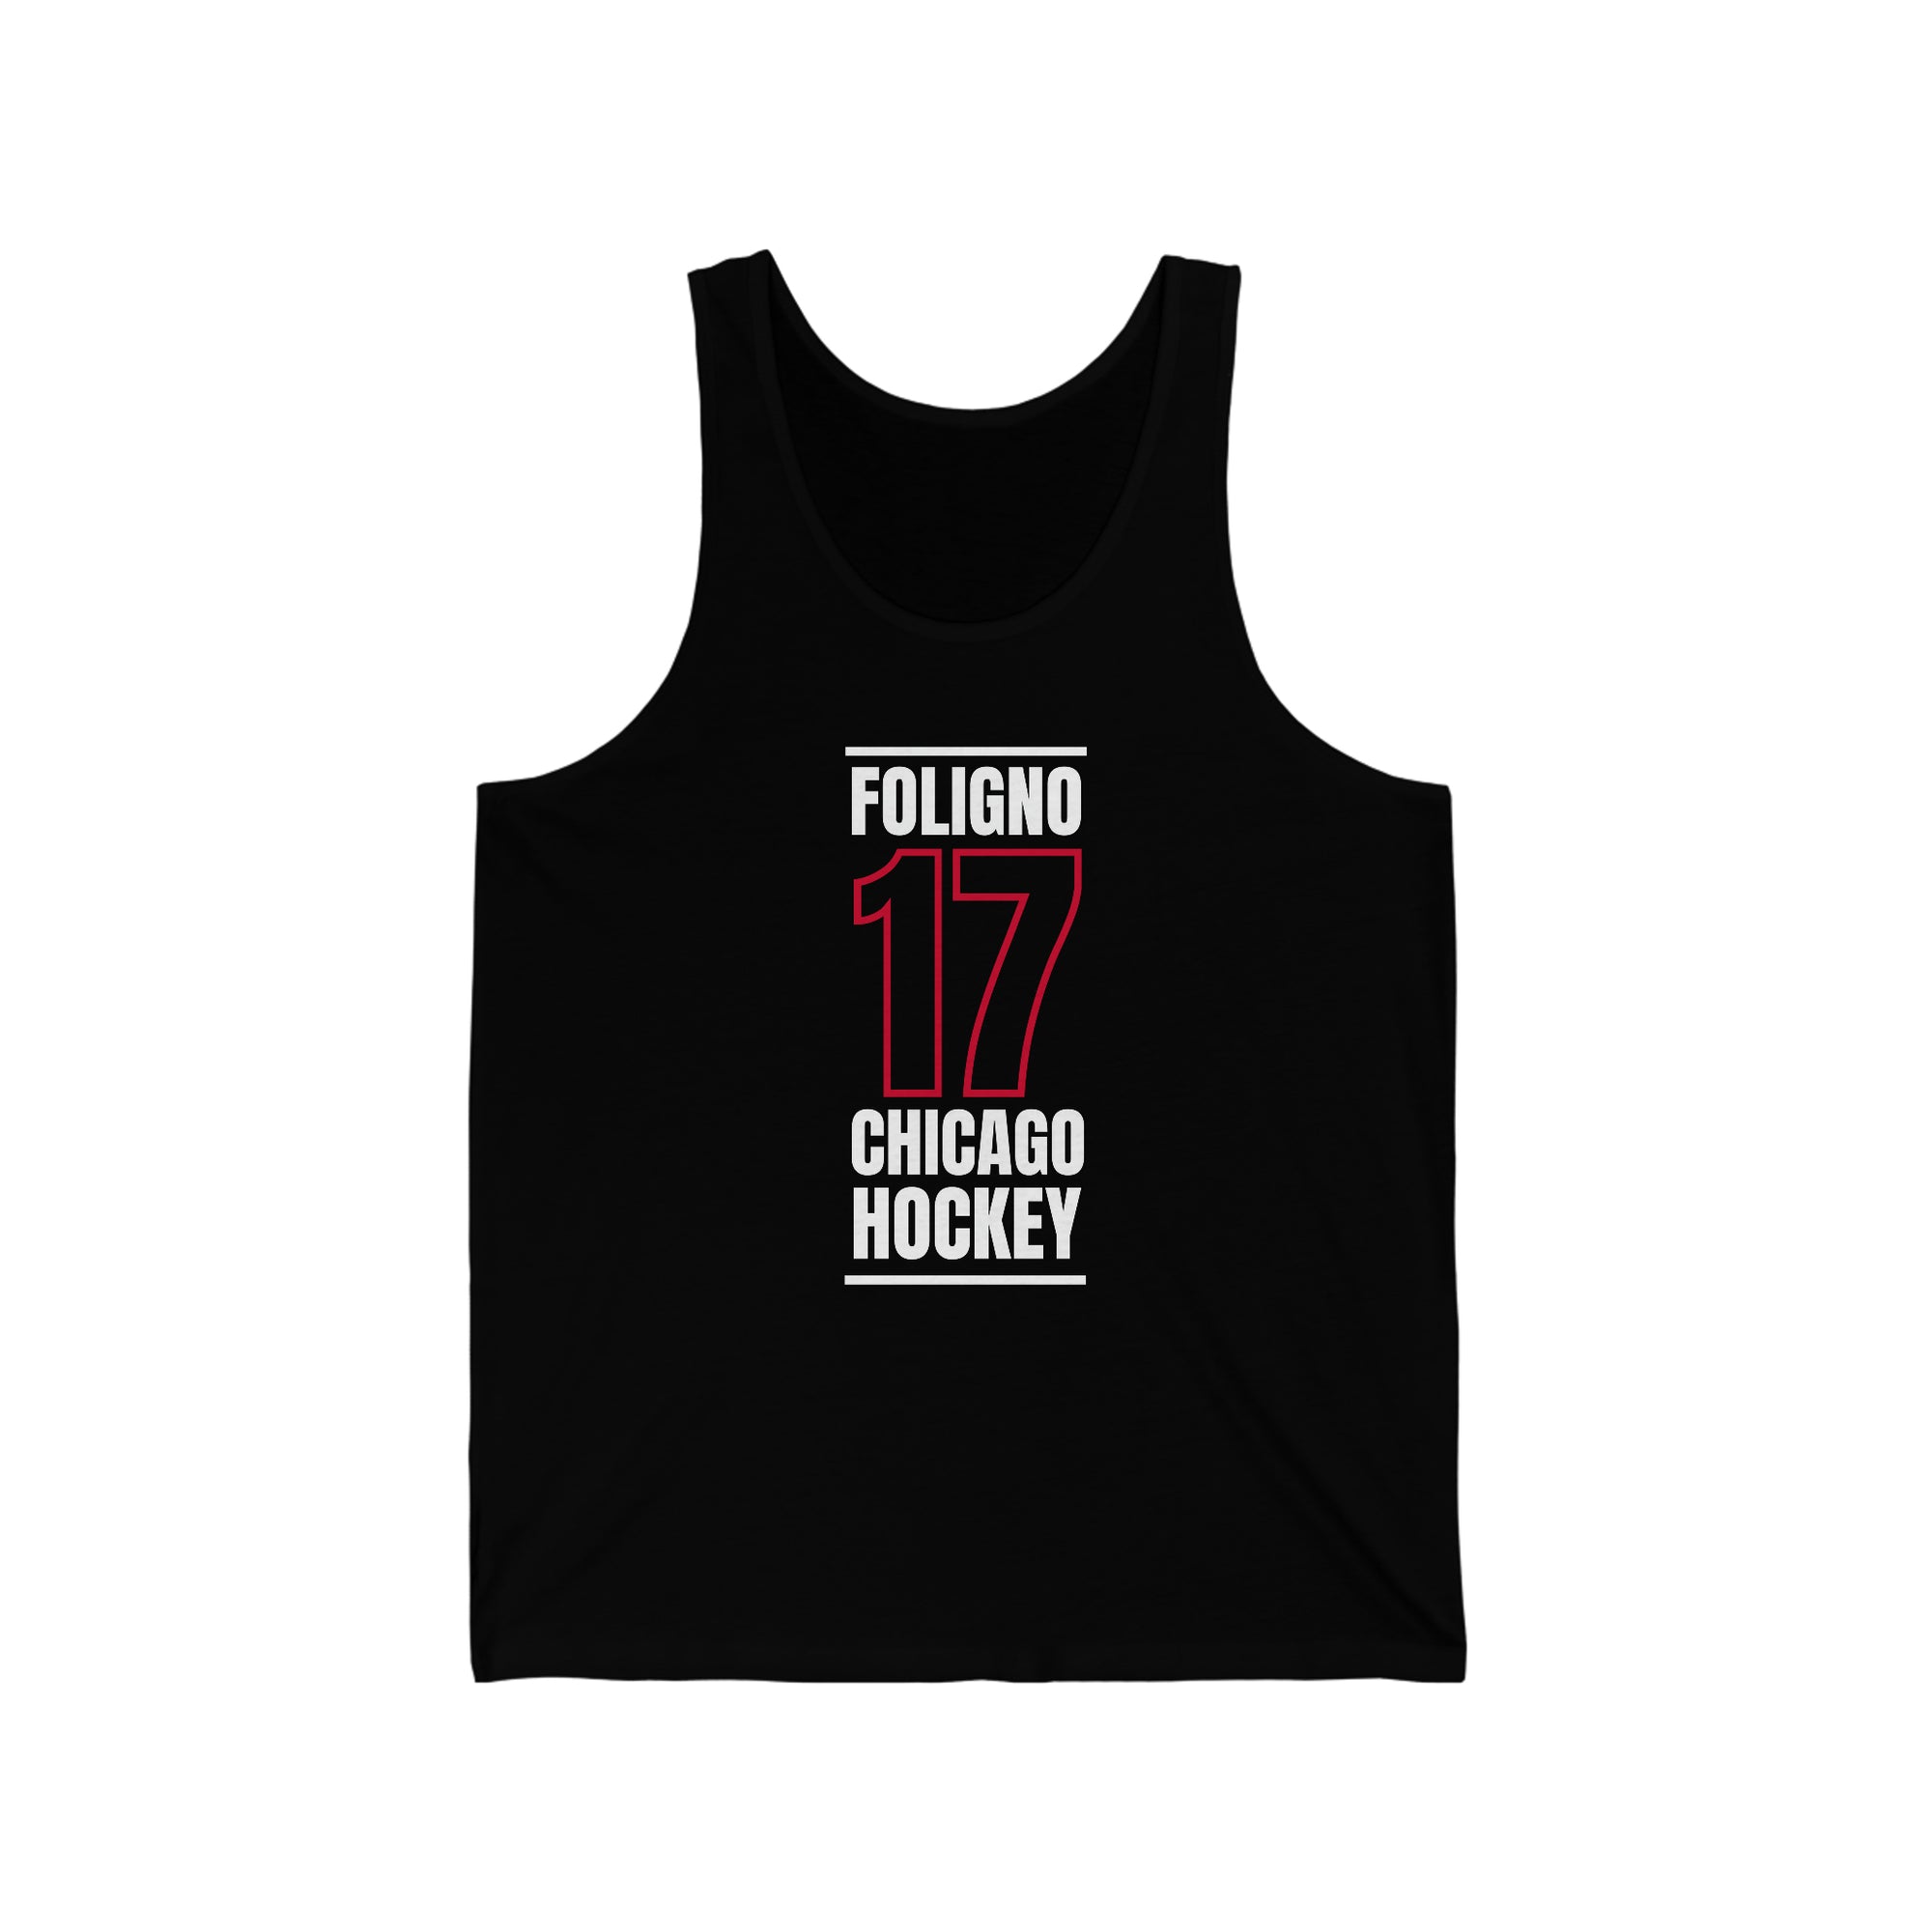 Foligno 17 Chicago Hockey Black Vertical Design Unisex Jersey Tank Top